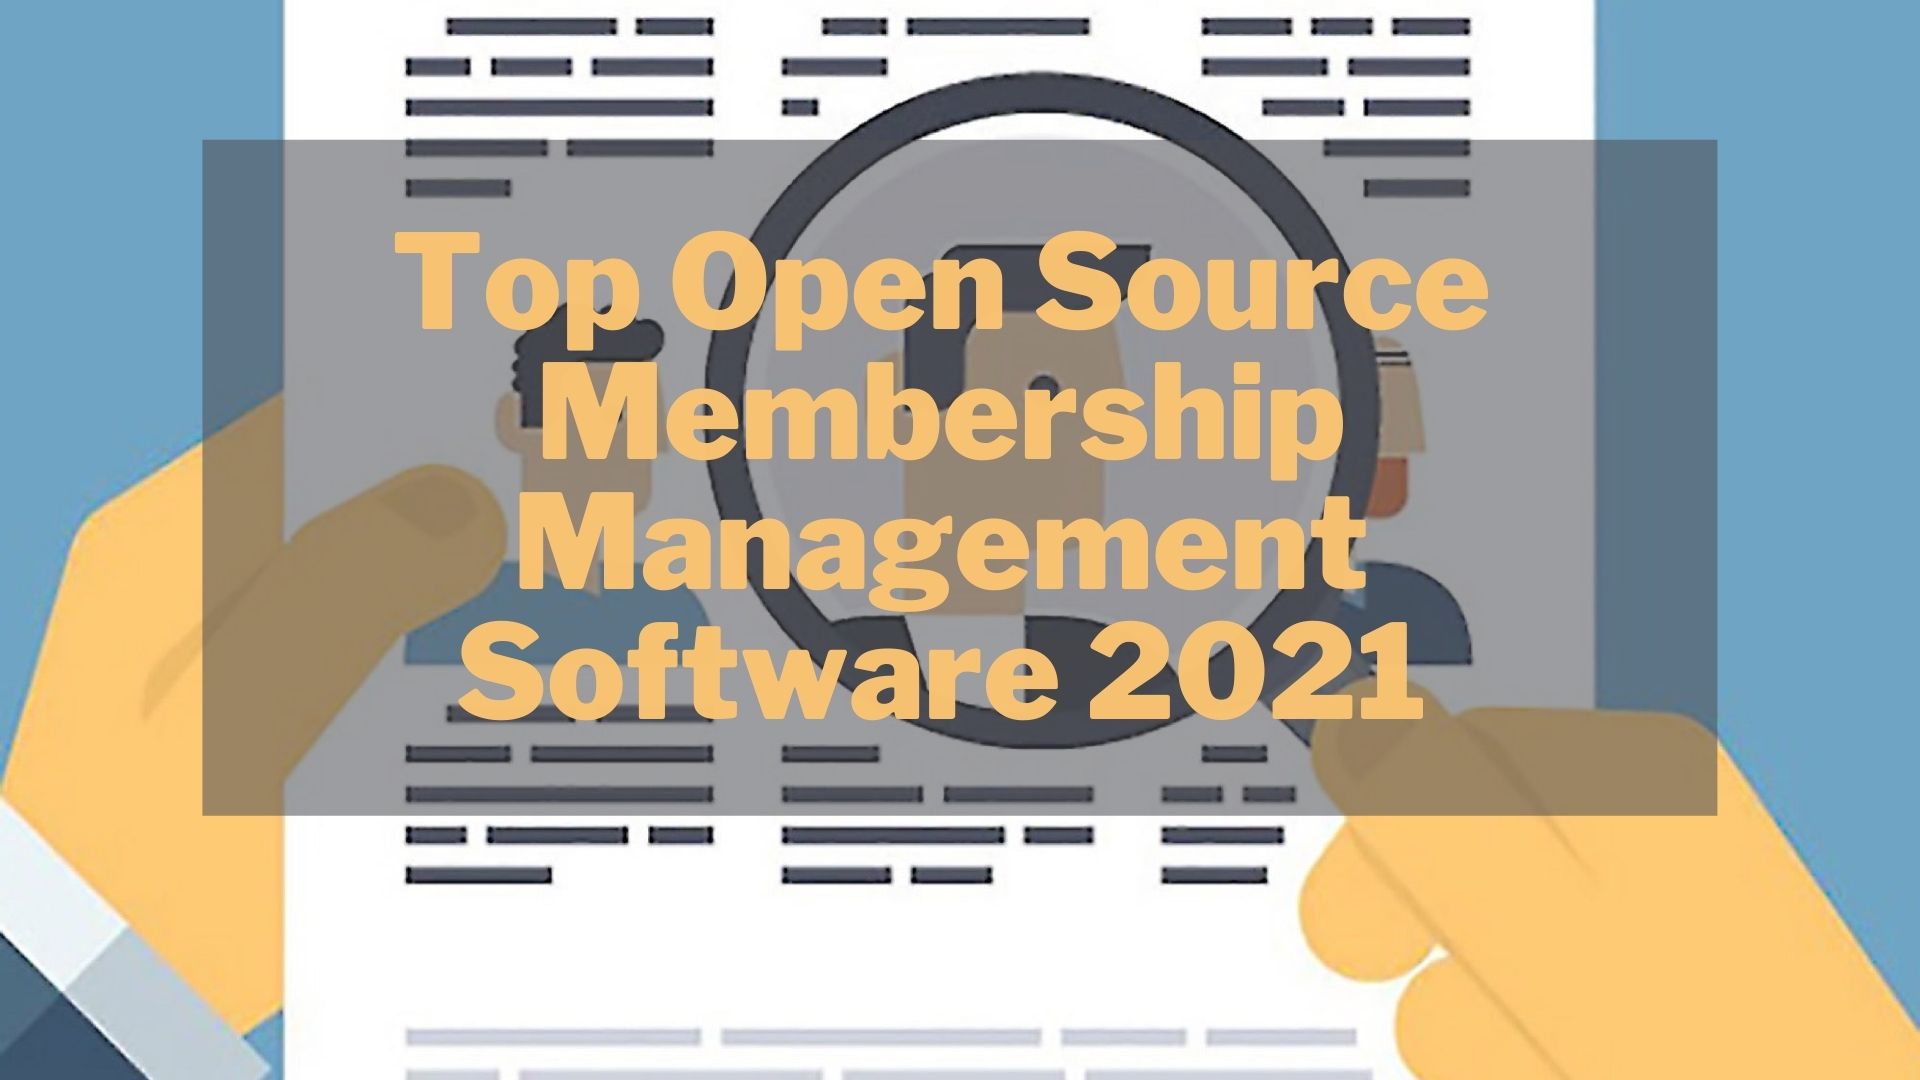 Top Open Source Membership Management Software 2021